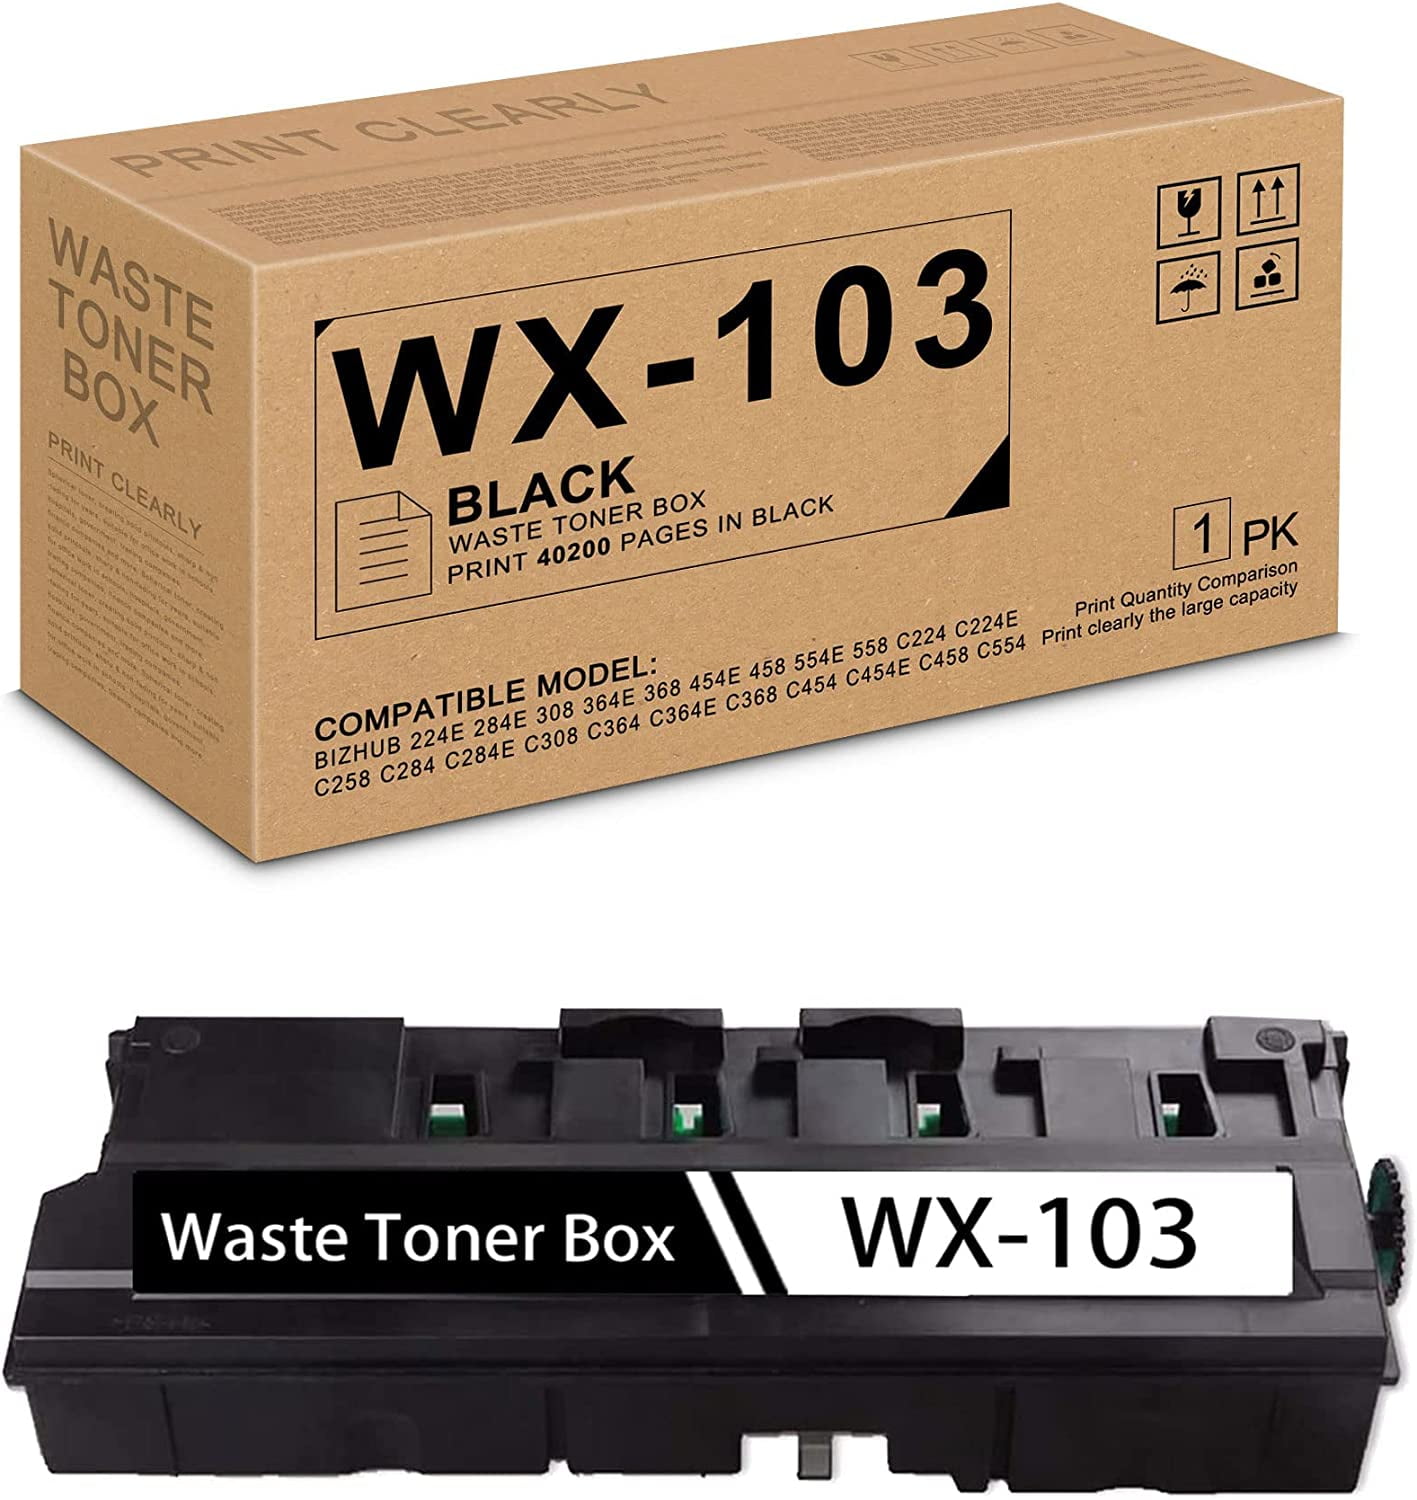 WX-103. WX-103 WX-105 различия. WX-103 фото коробки a4nnwy4/a4nnwy4. Коника 224